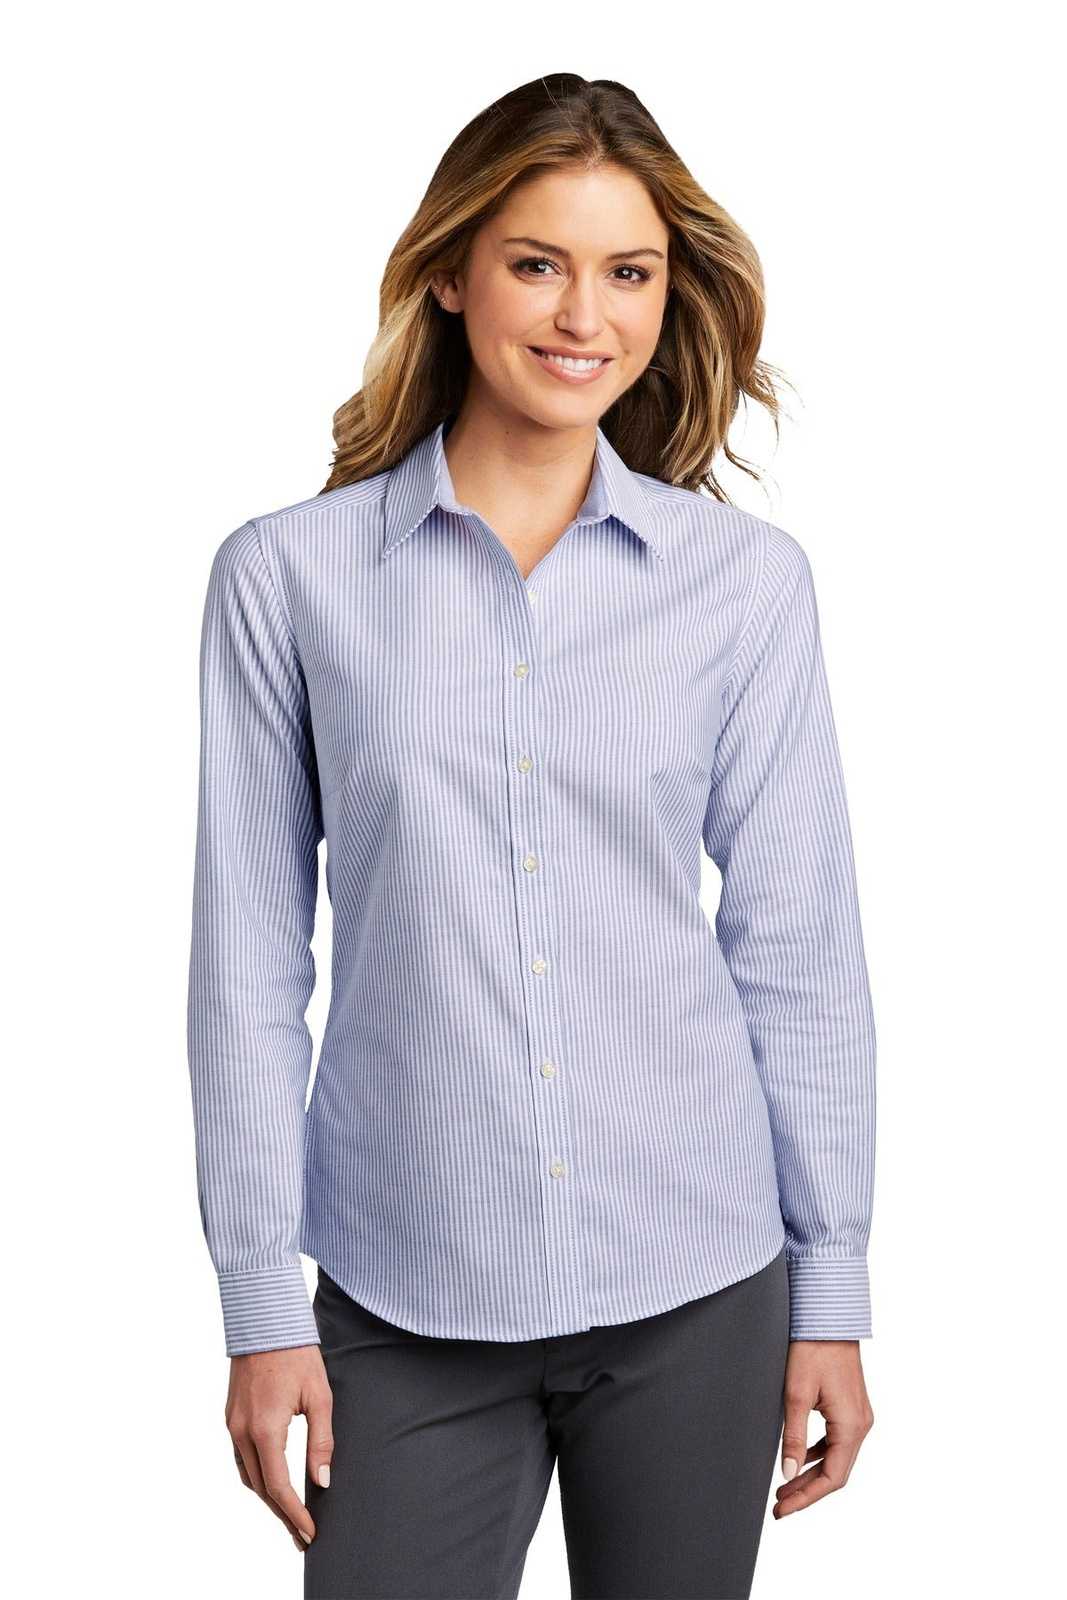 Port Authority LW657 Ladies SuperPro Oxford Stripe Shirt - Oxford Blue/ White - HIT a Double - 1